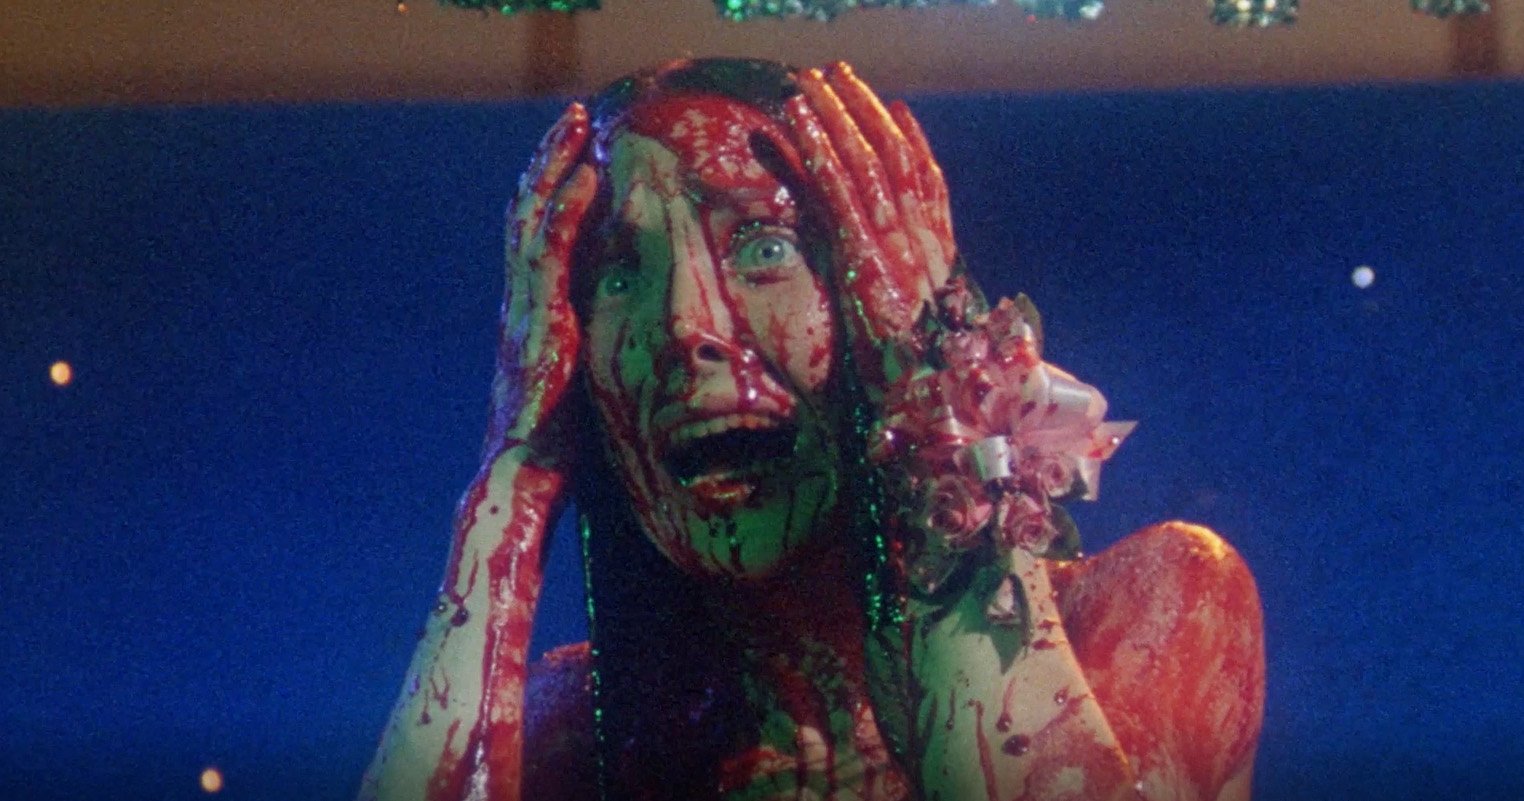 Carrie (Sissy Spacek) covered in blood in Carrie (1976)